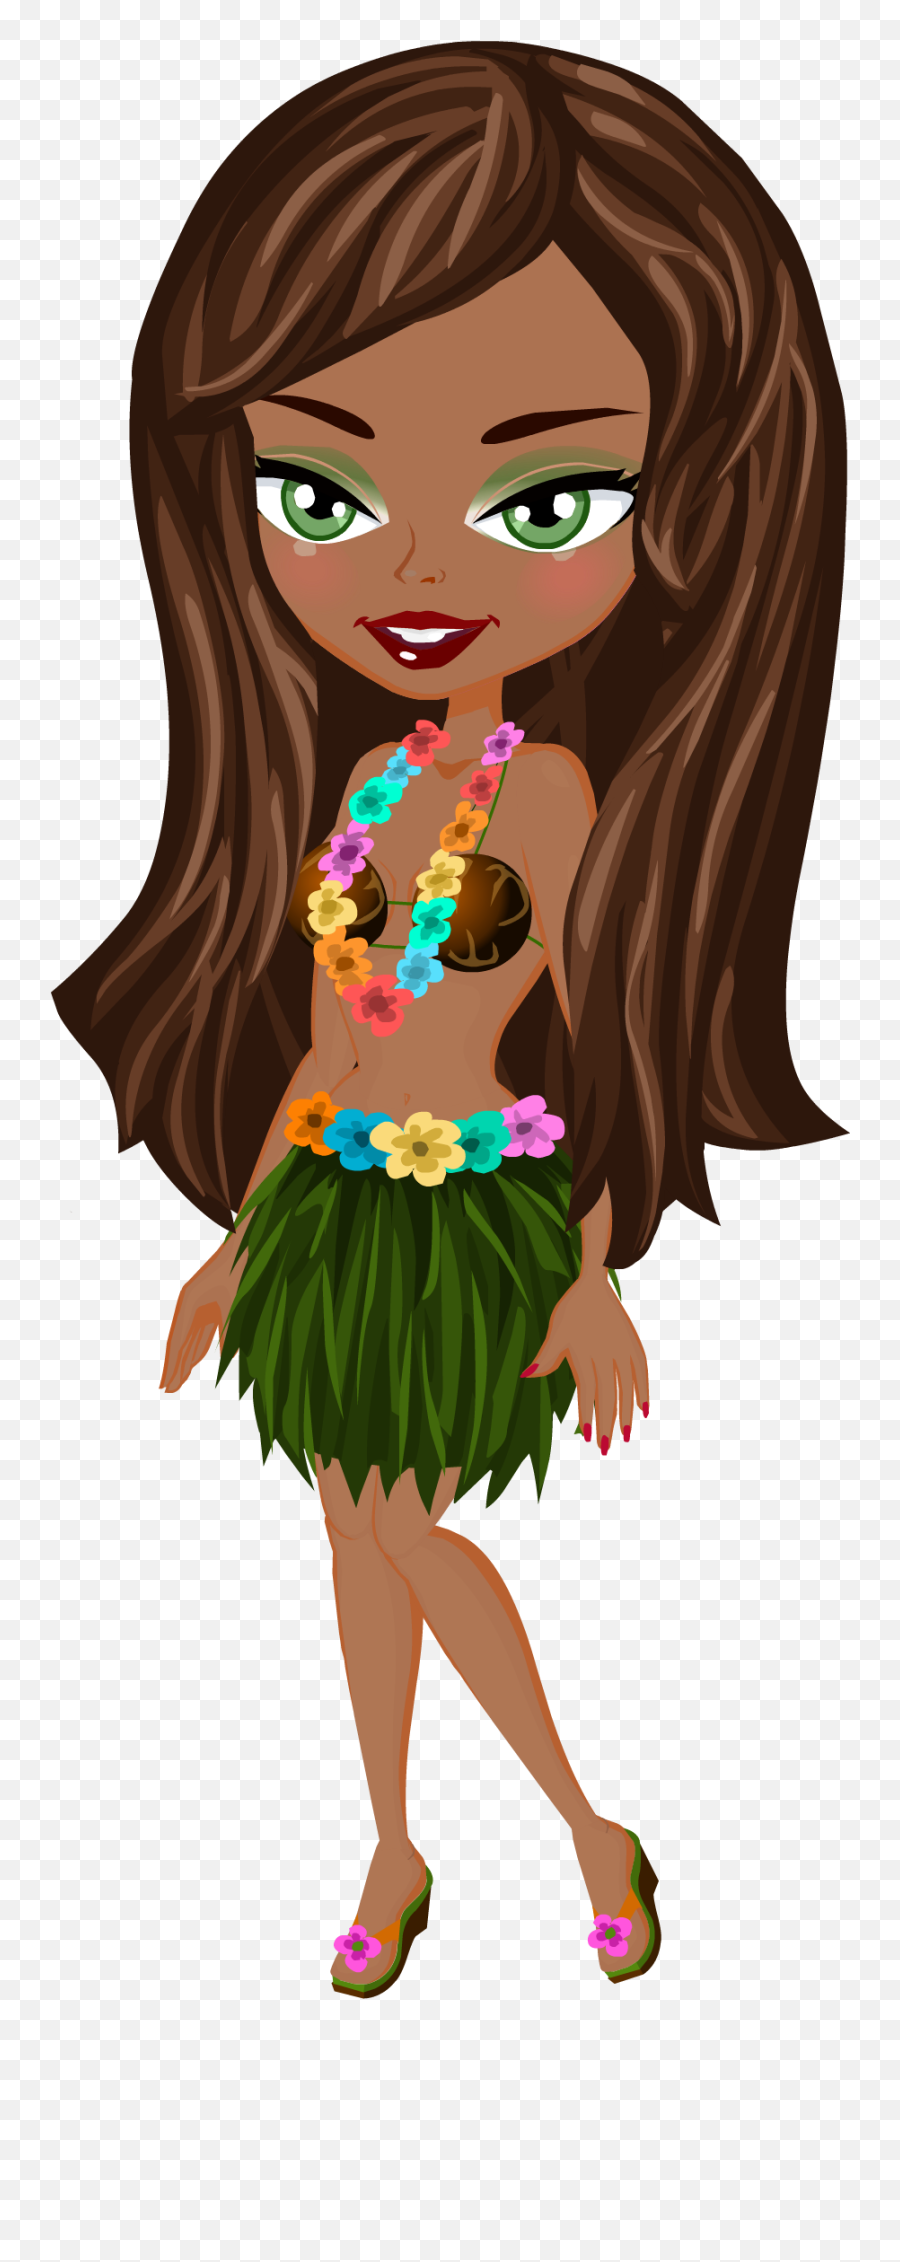 Download Hulagirl - Hula Girl Boat Charter Png Image With No Emoji,Hula Dancer Clipart